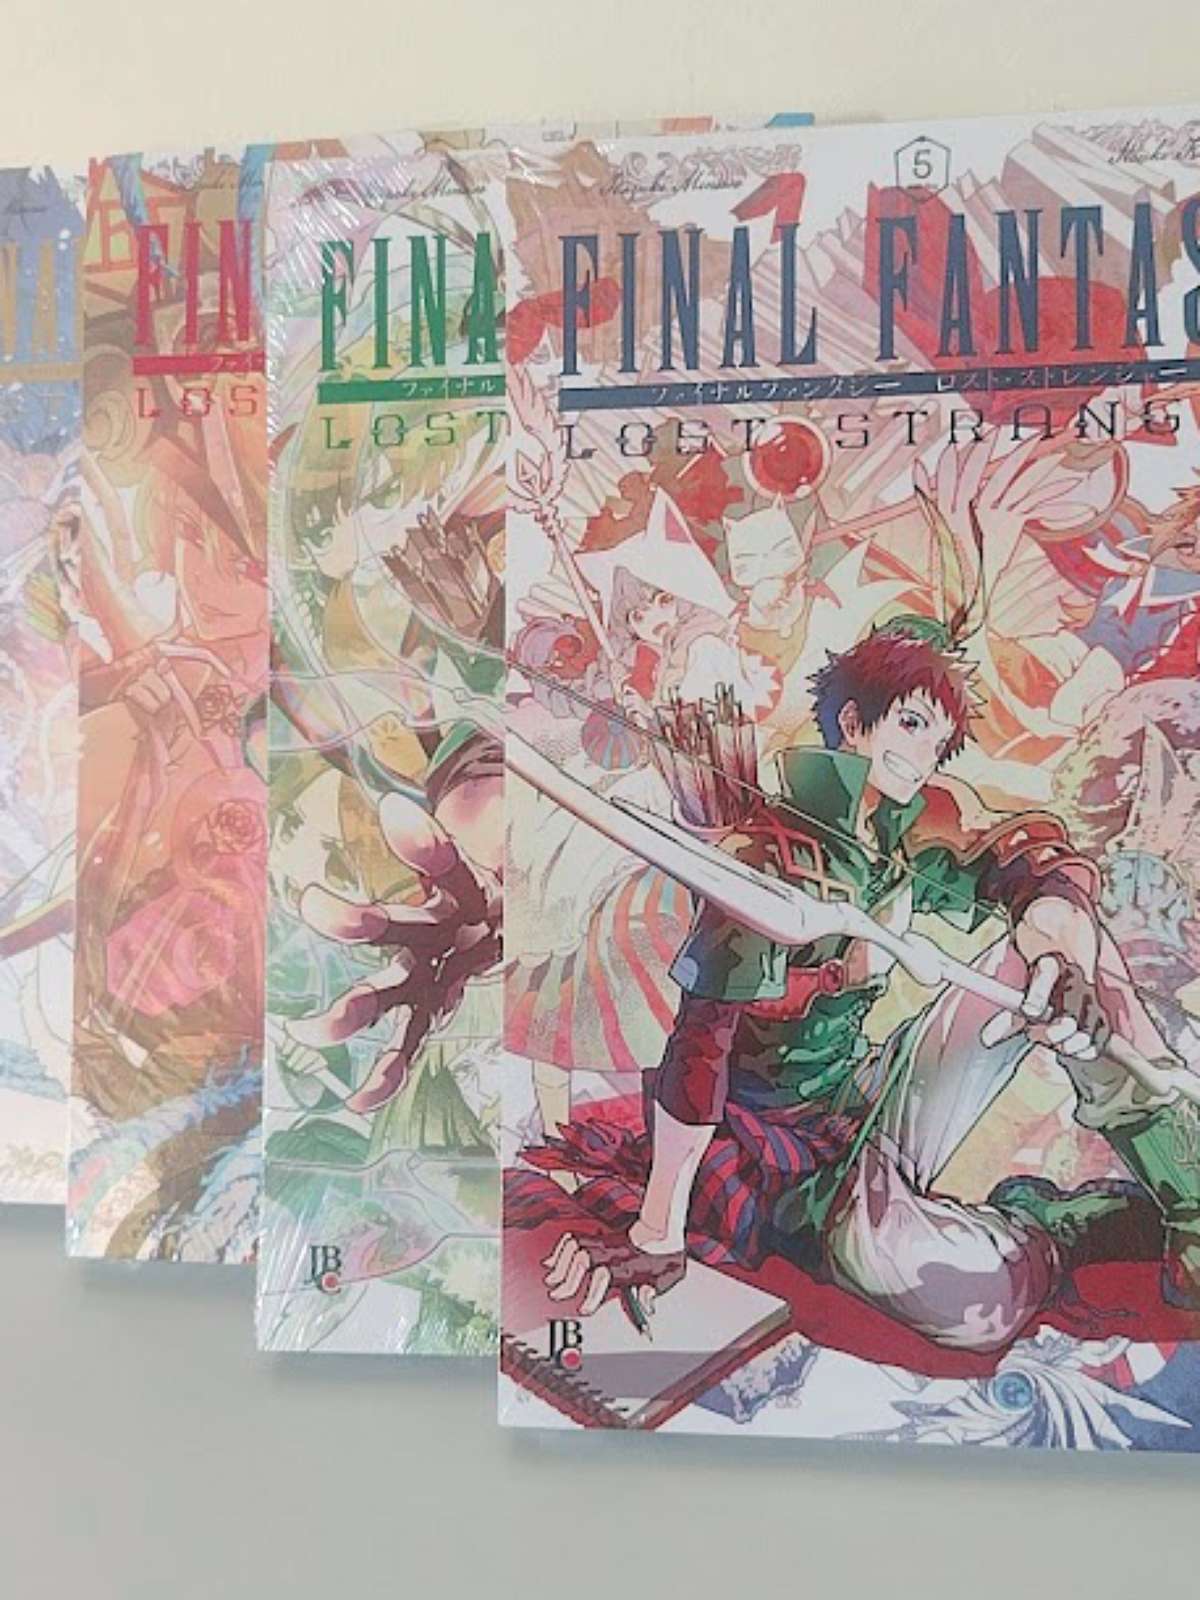 Mangá da franquia Final Fantasy chega ao Brasil - Made in Japan